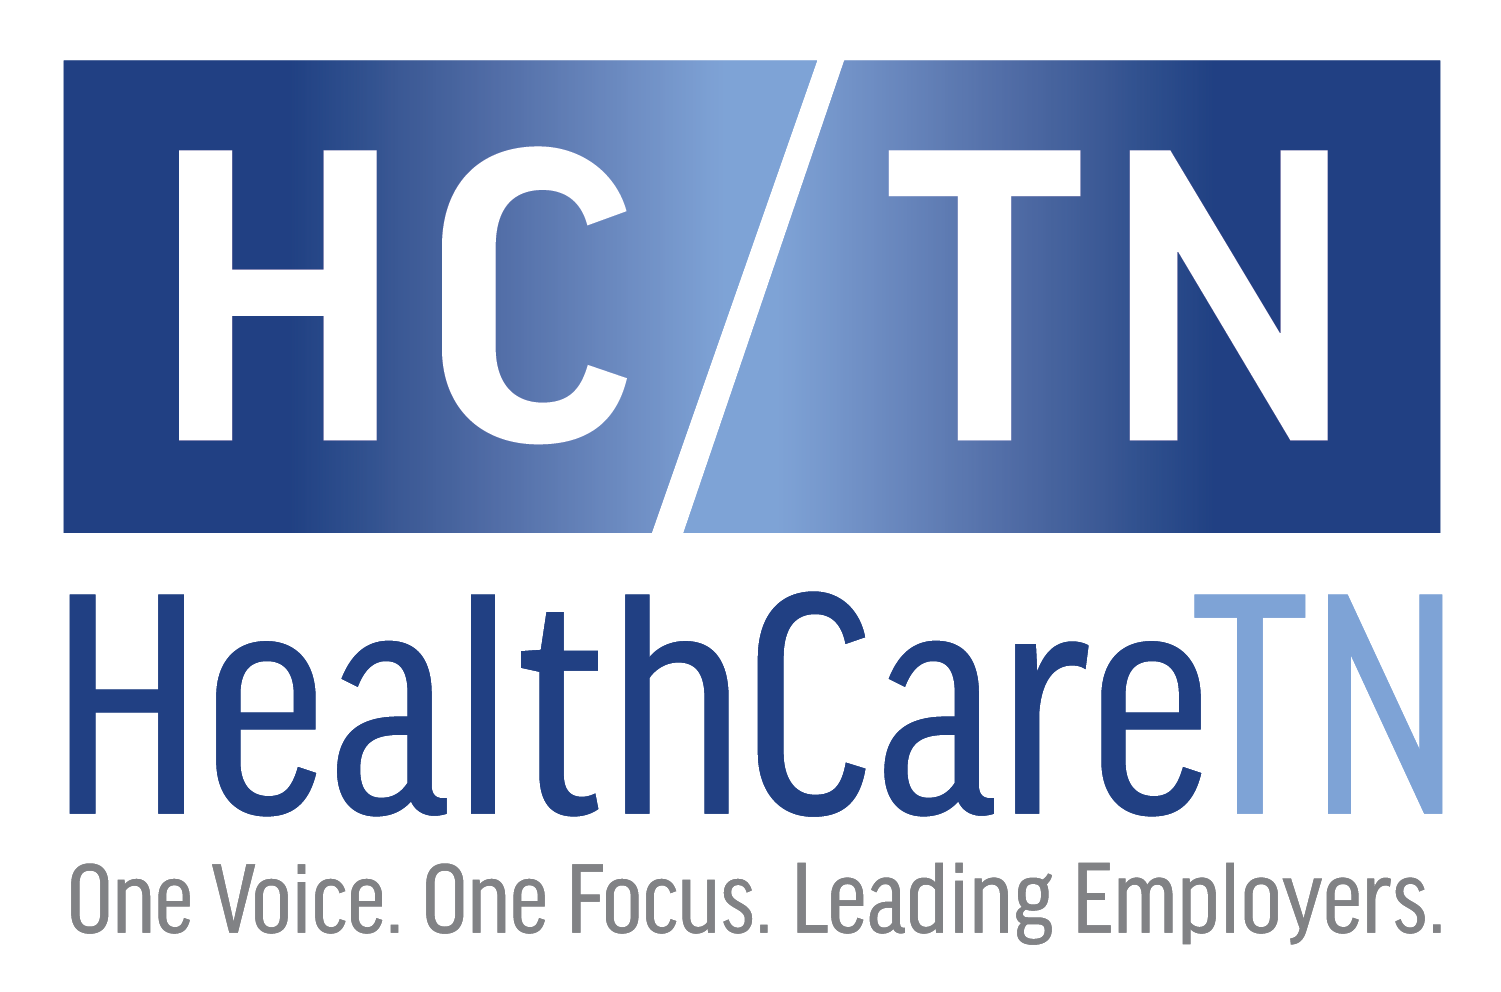 HCTN logo